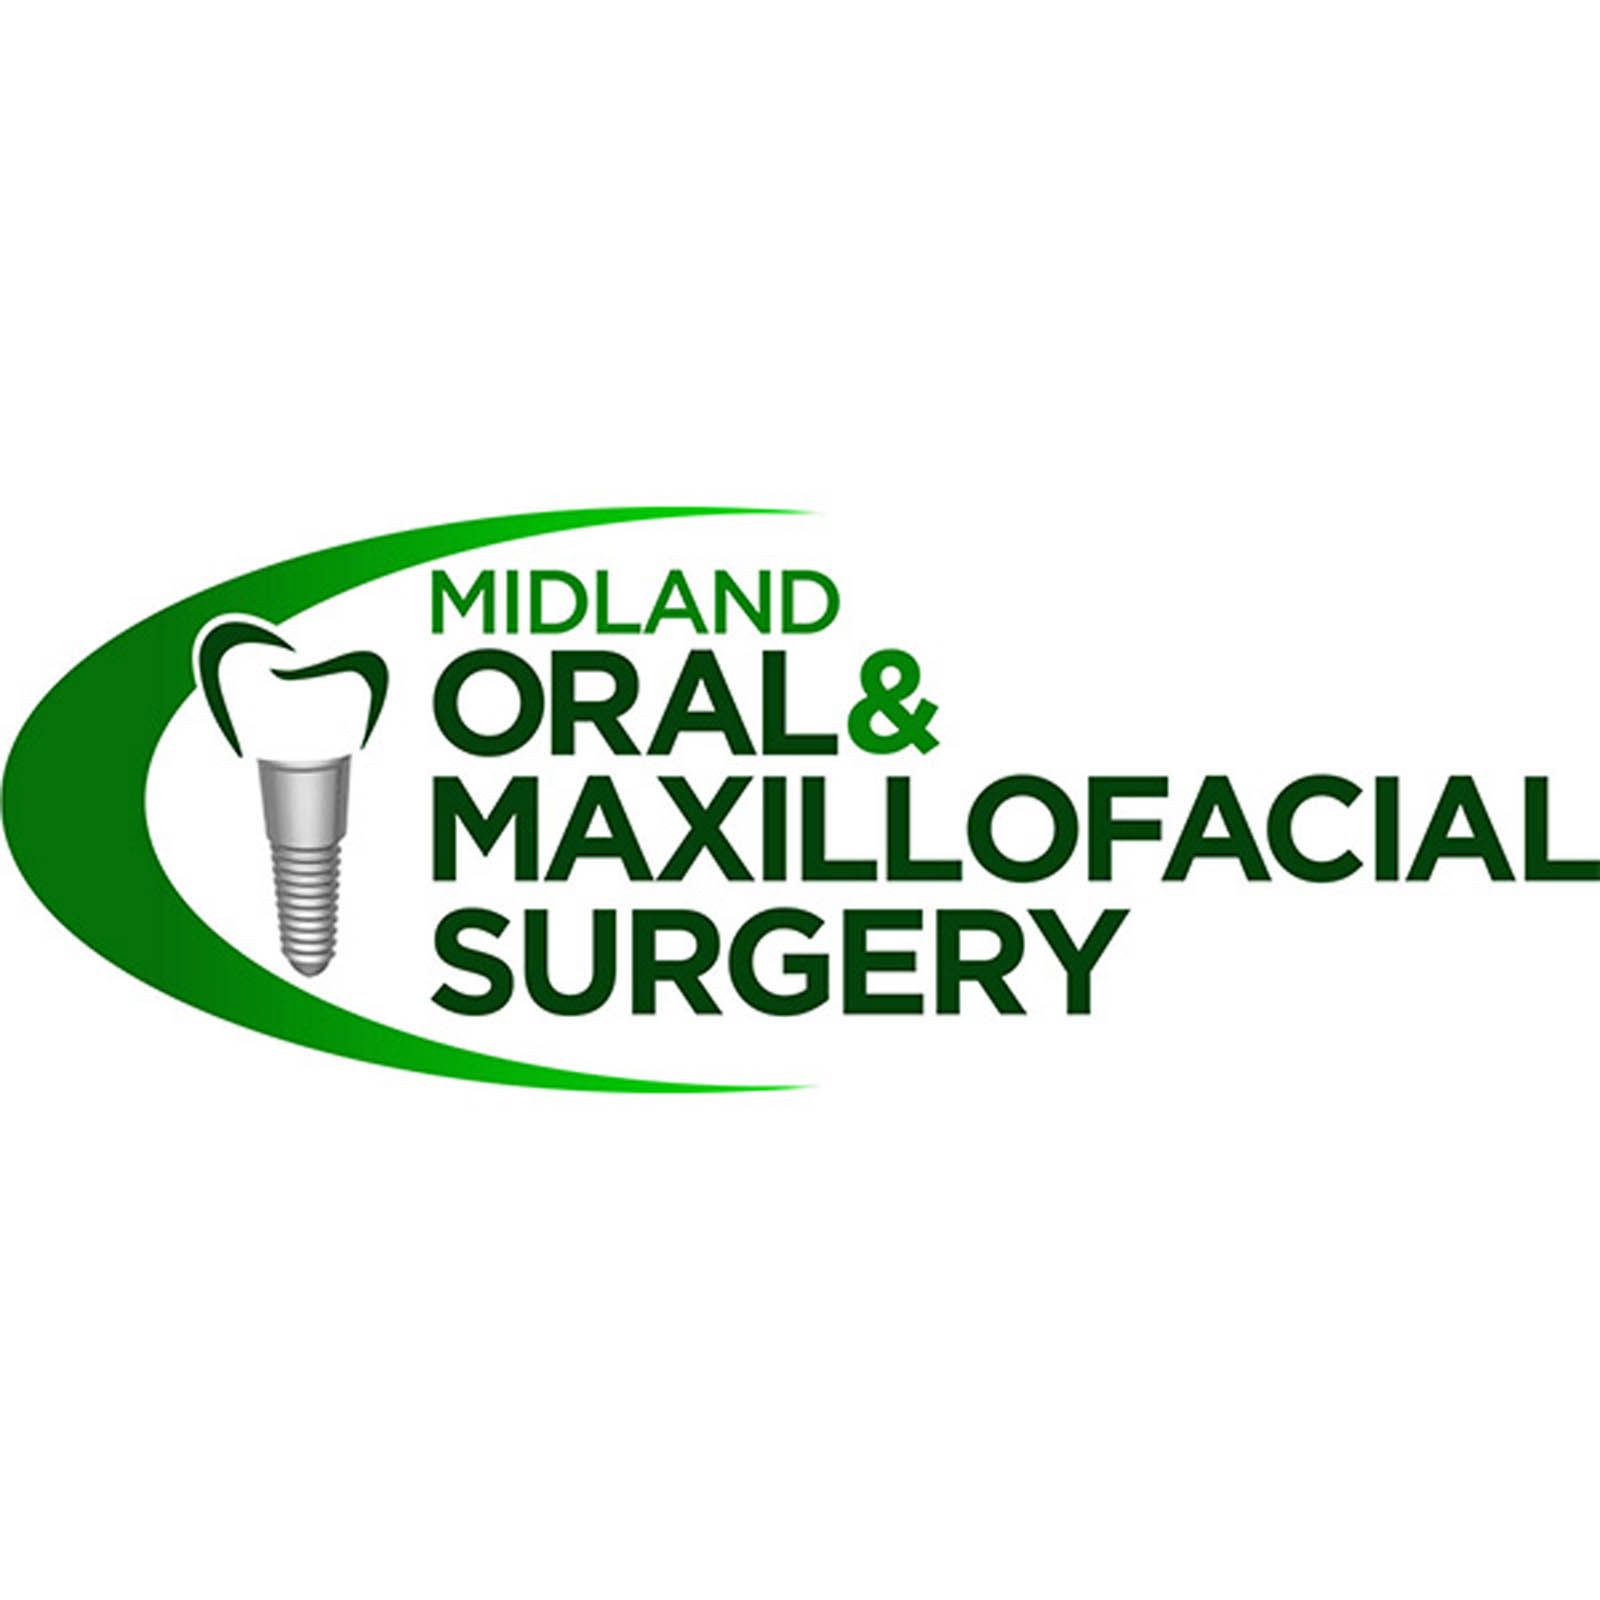 Midland Oral & Maxillofacial Surgery